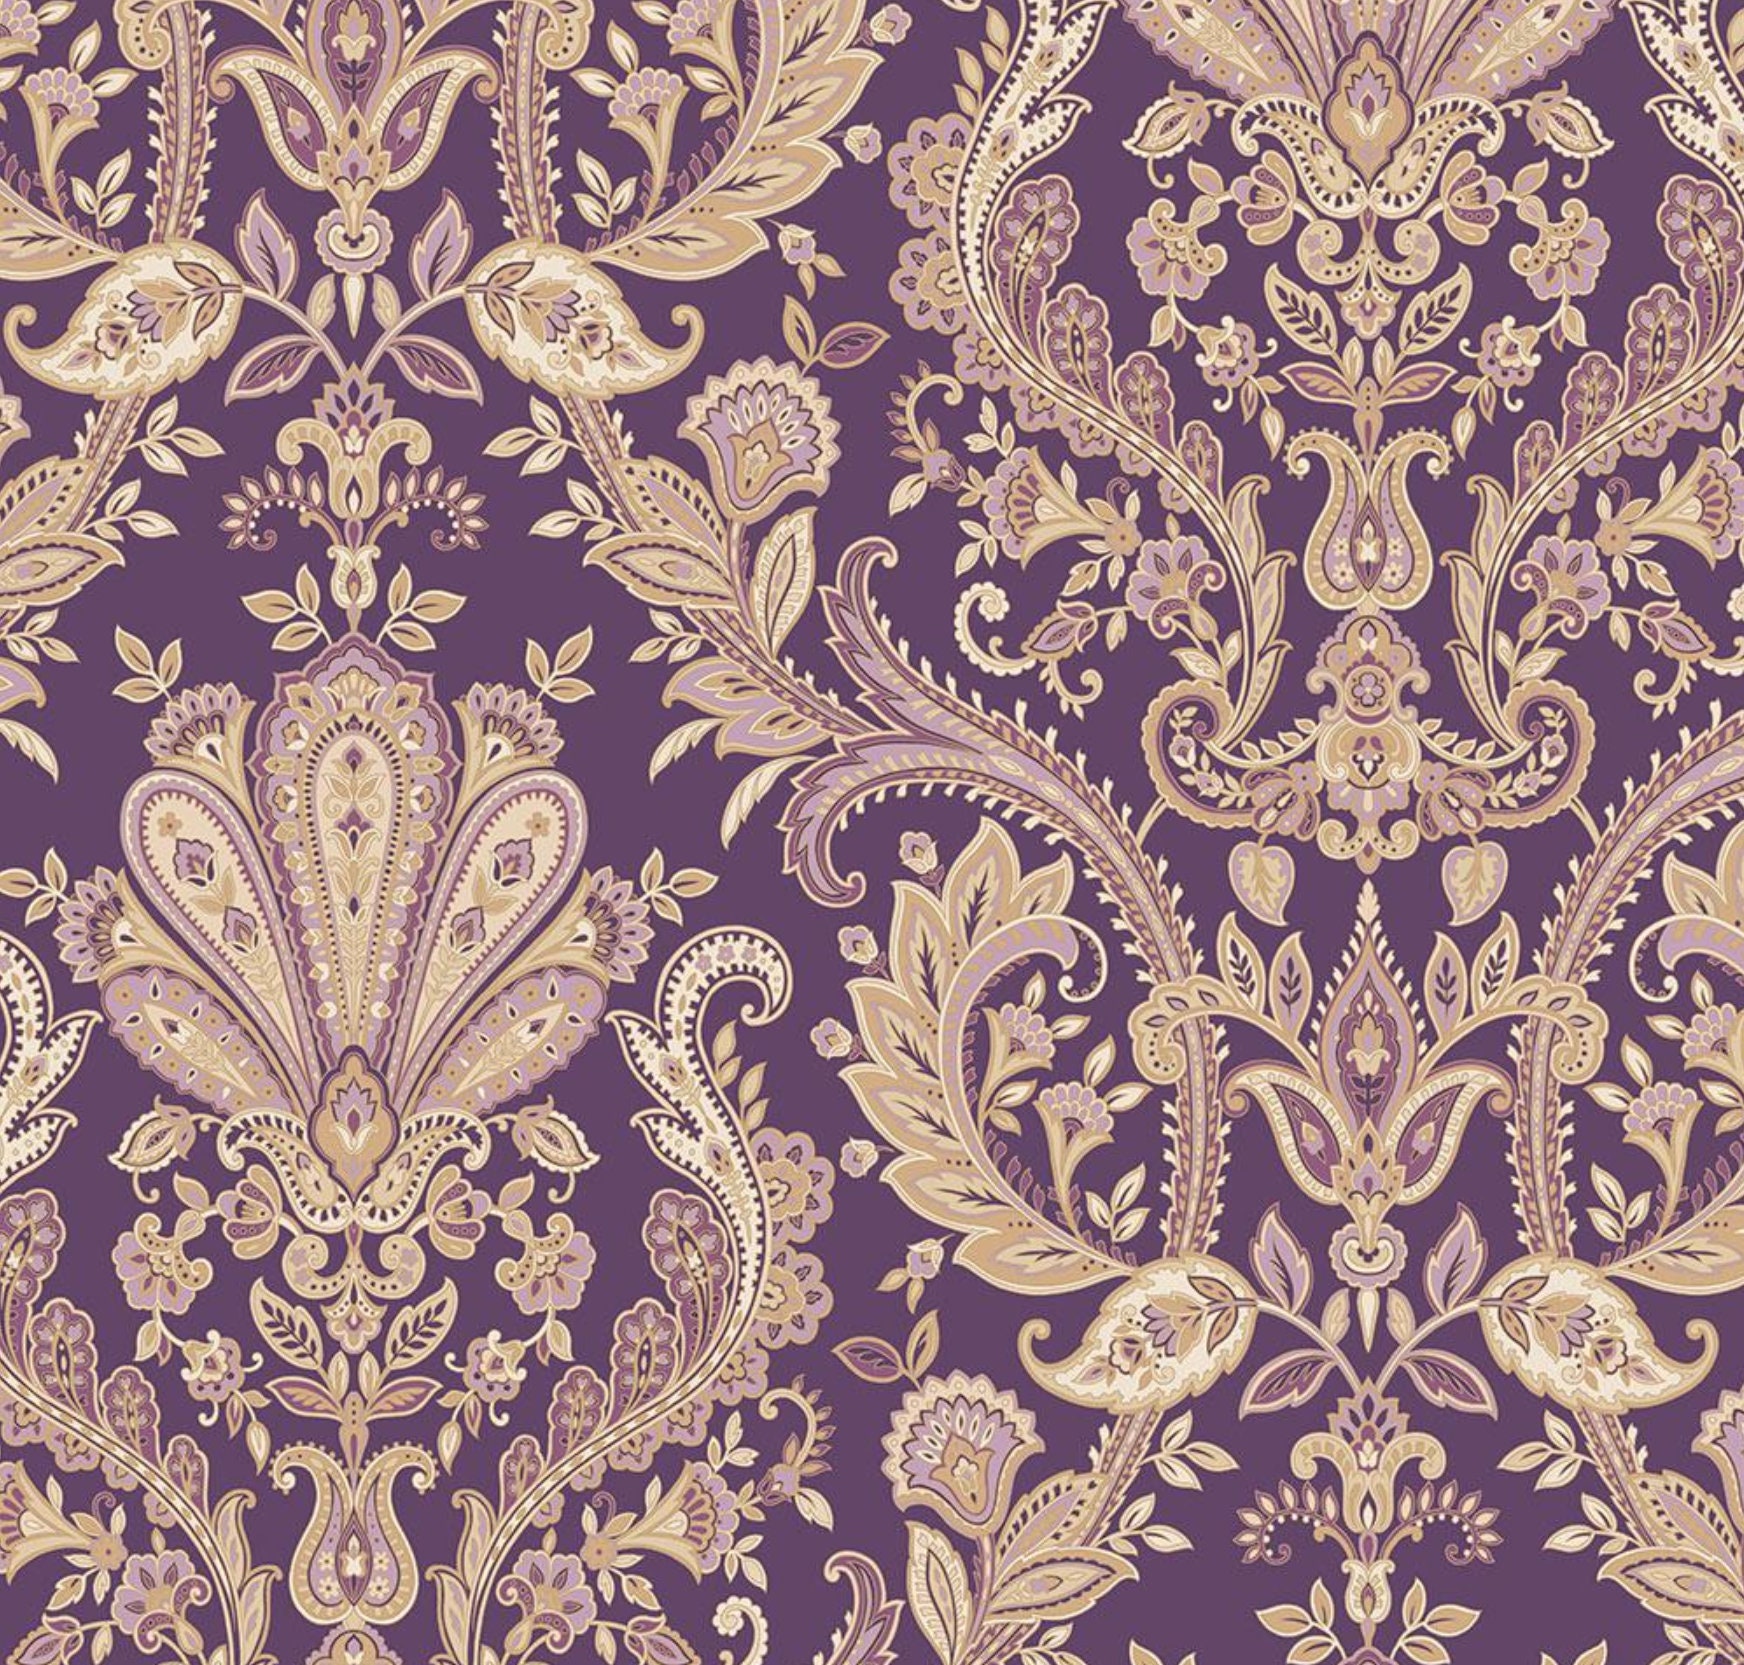 Ornate baroque damask wallpaper purple victorian gothic